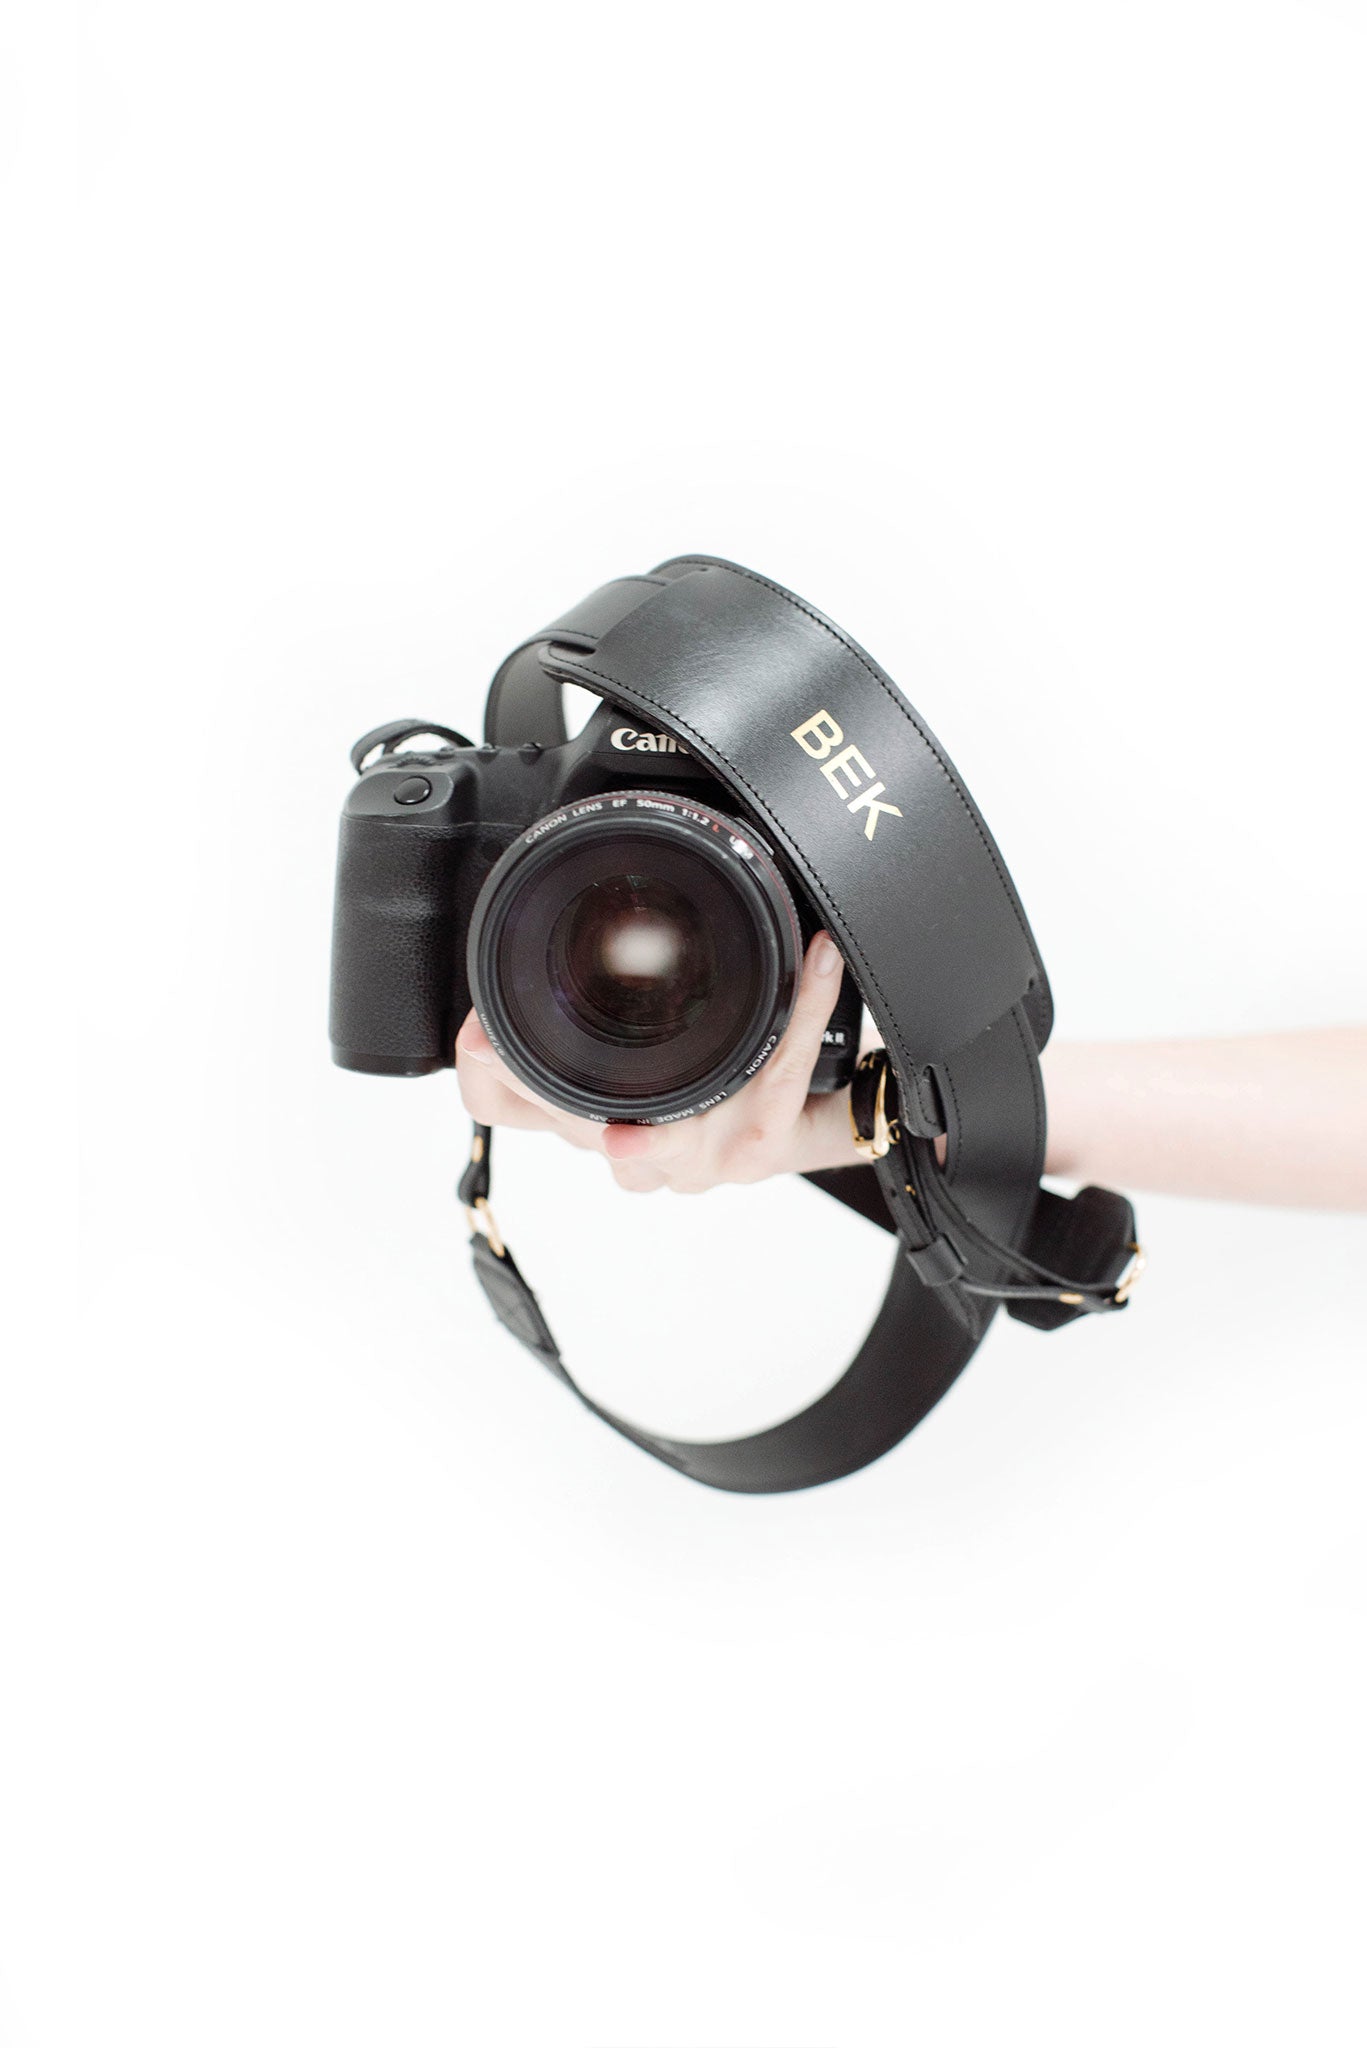 Bear Fotostrap - personalized black leather camera strap 